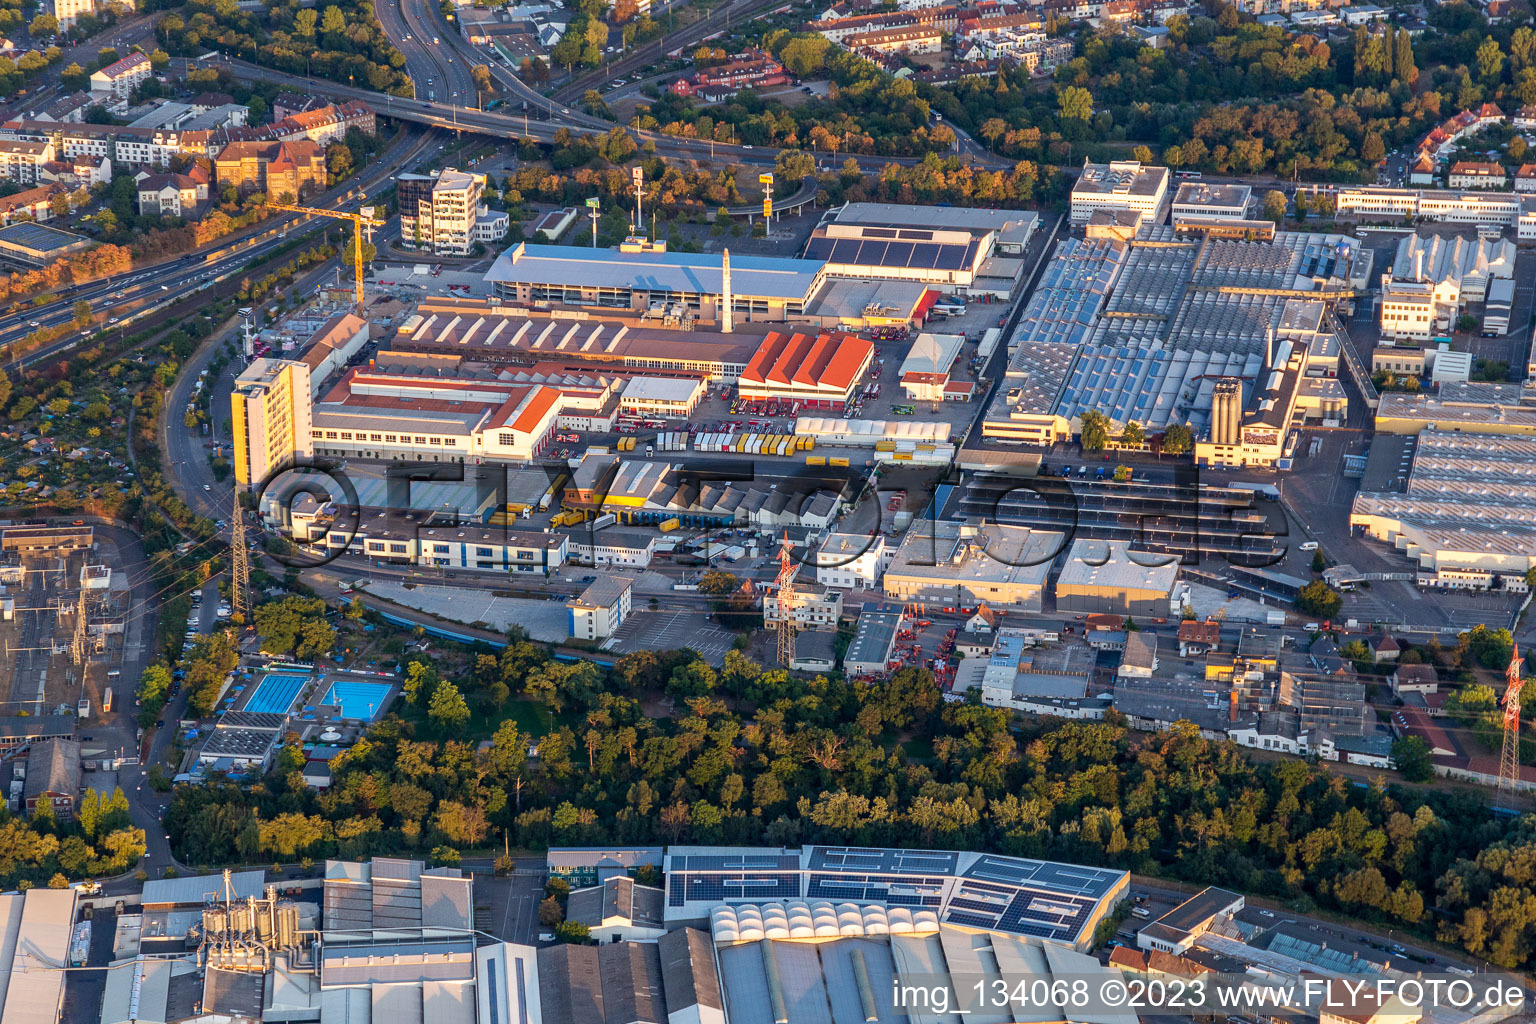 Aerial view of Michelin Reifenwerke AG & Co. KgaA in the district Grünwinkel in Karlsruhe in the state Baden-Wuerttemberg, Germany